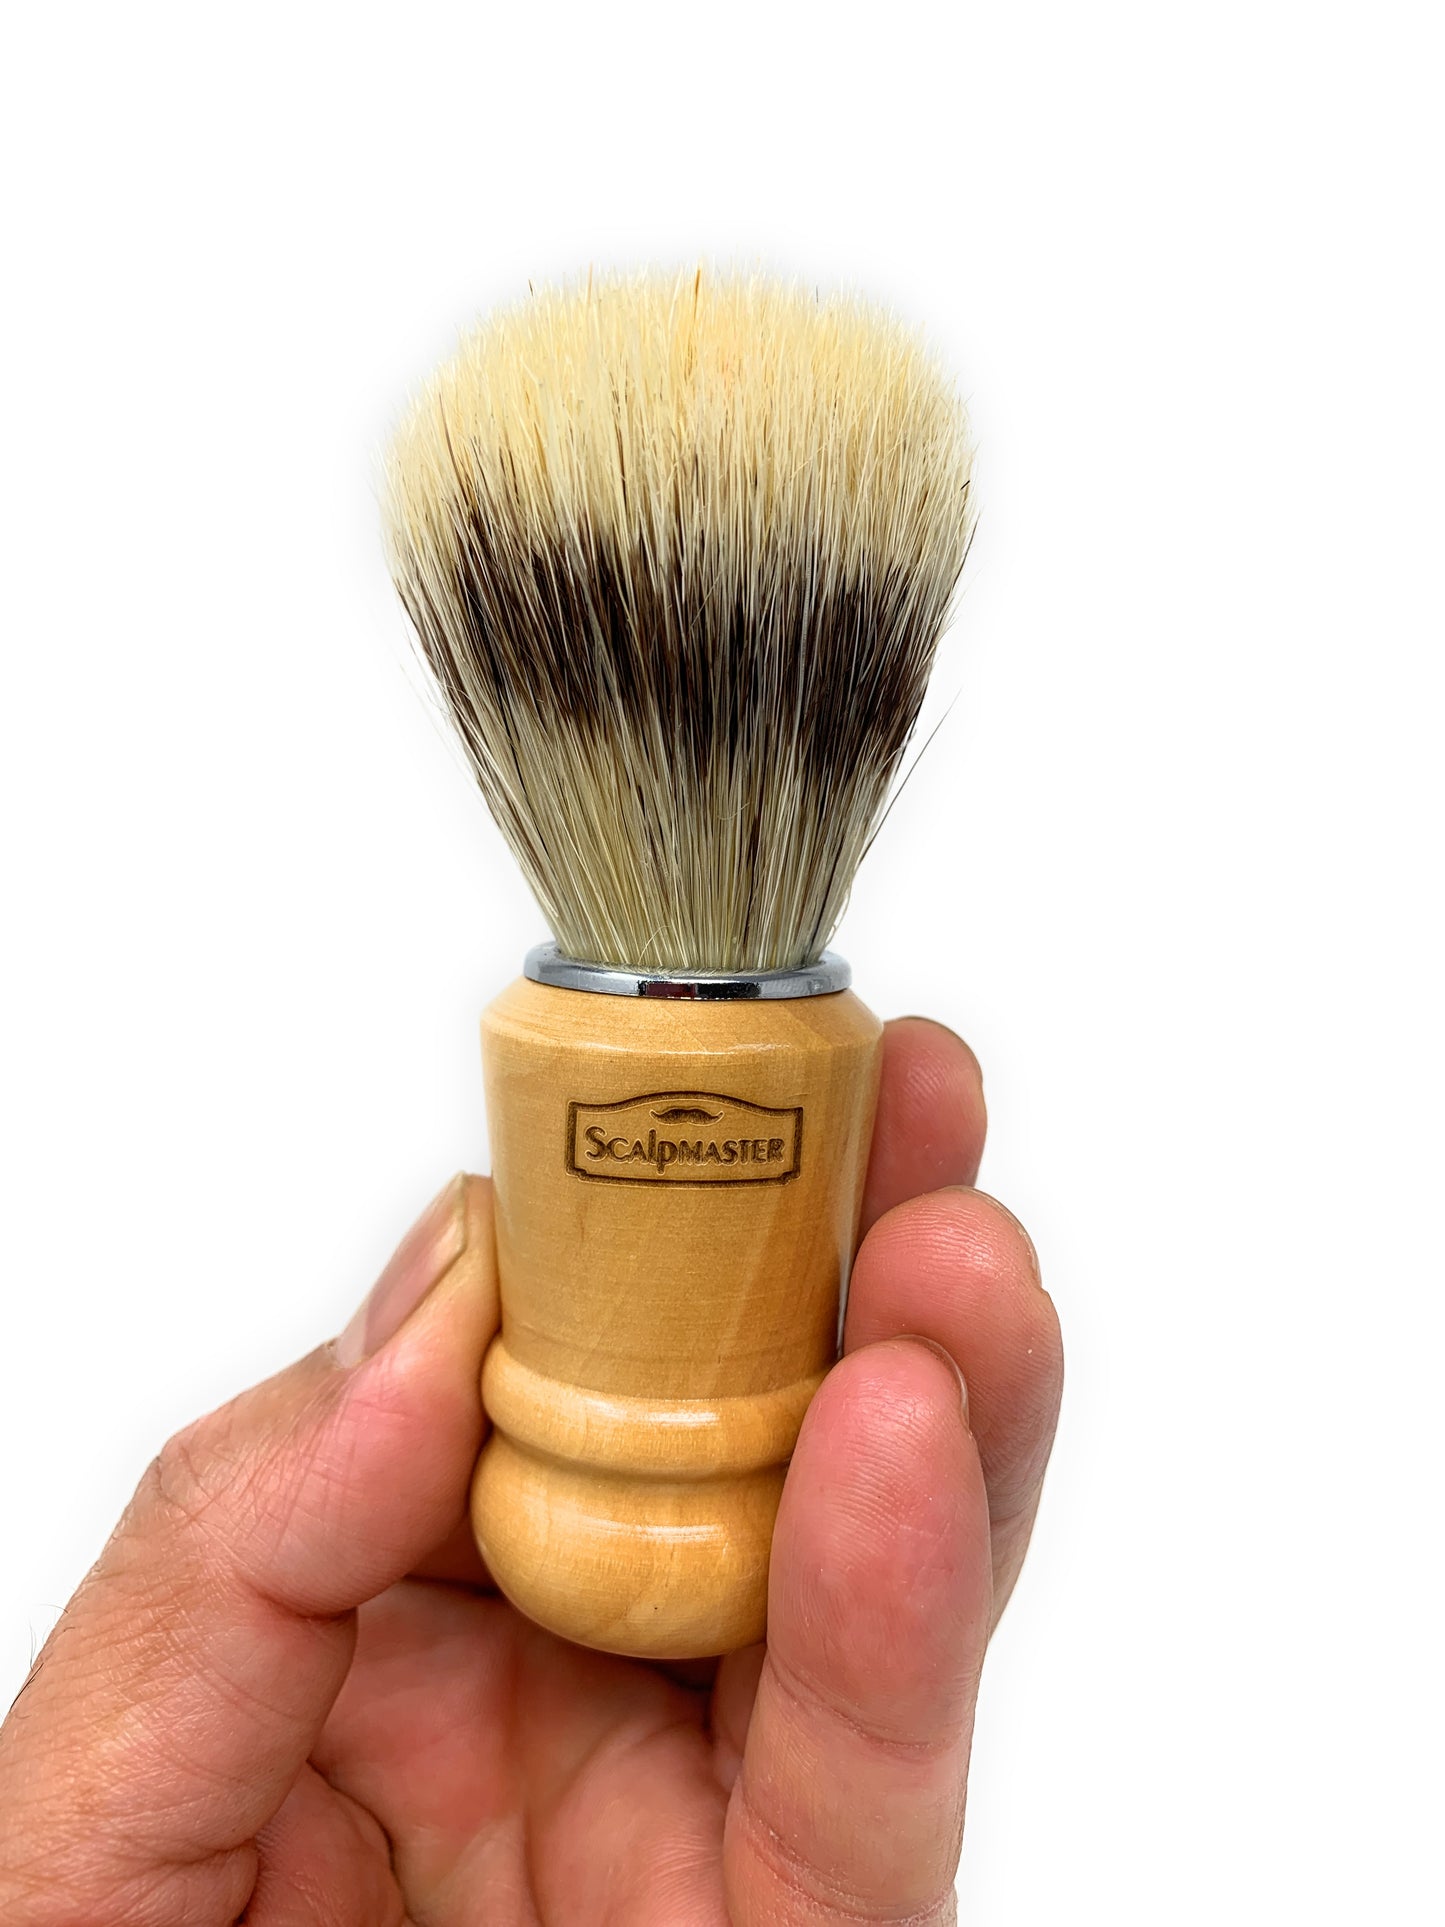 Scalpmaster Boar Bristles Shaving Brush Wood Handle 100% Boar Bristles SB-15